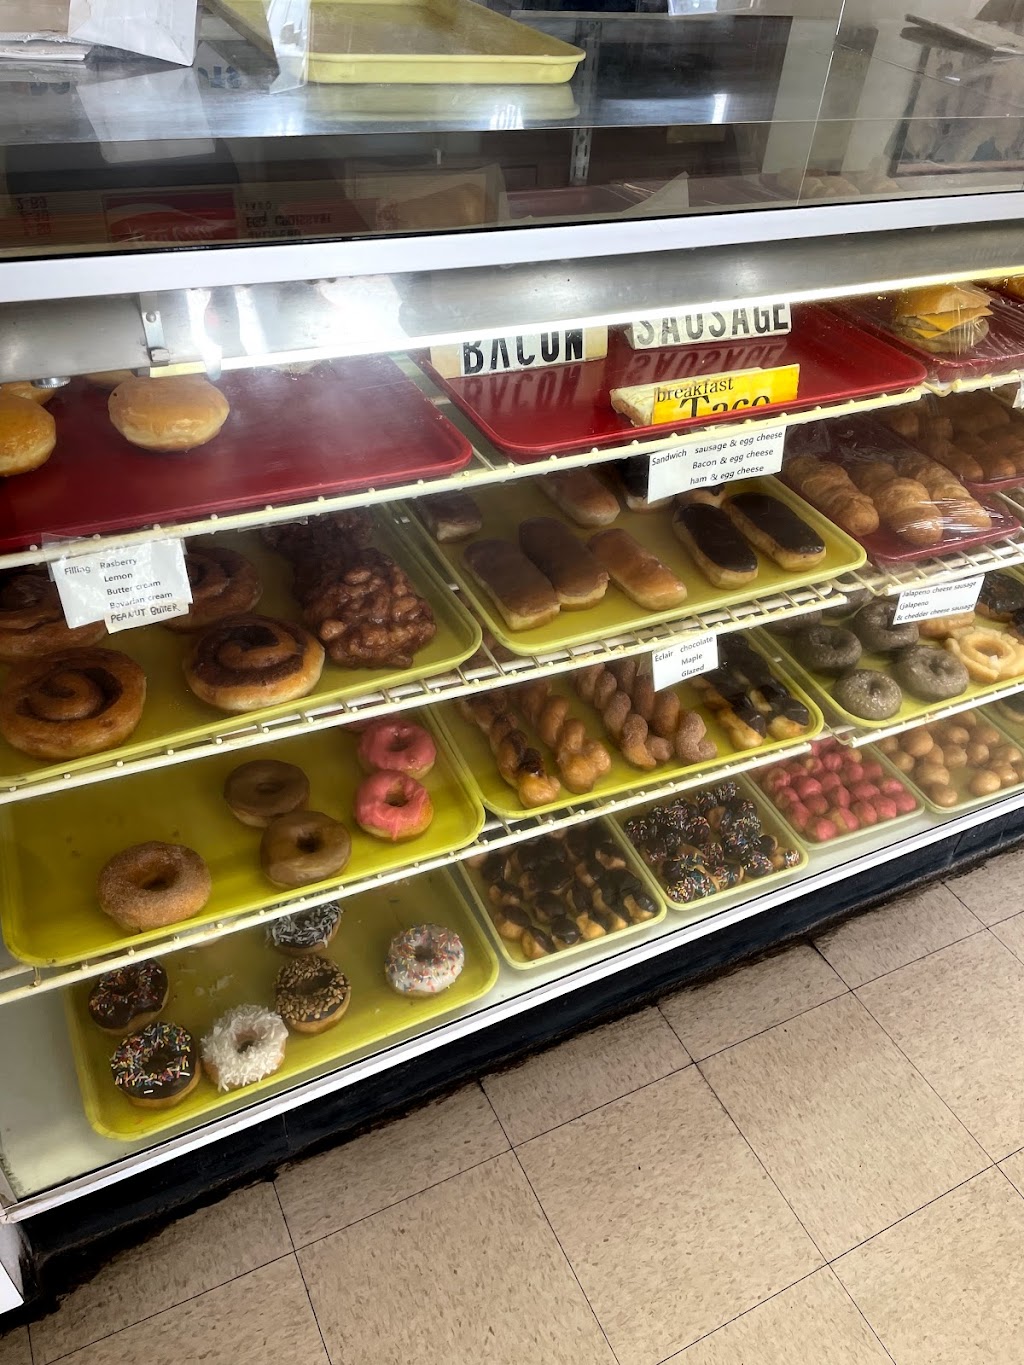 Ozzies Donuts | 615 S Lake Dallas Dr, Lake Dallas, TX 75065, USA | Phone: (940) 497-3736